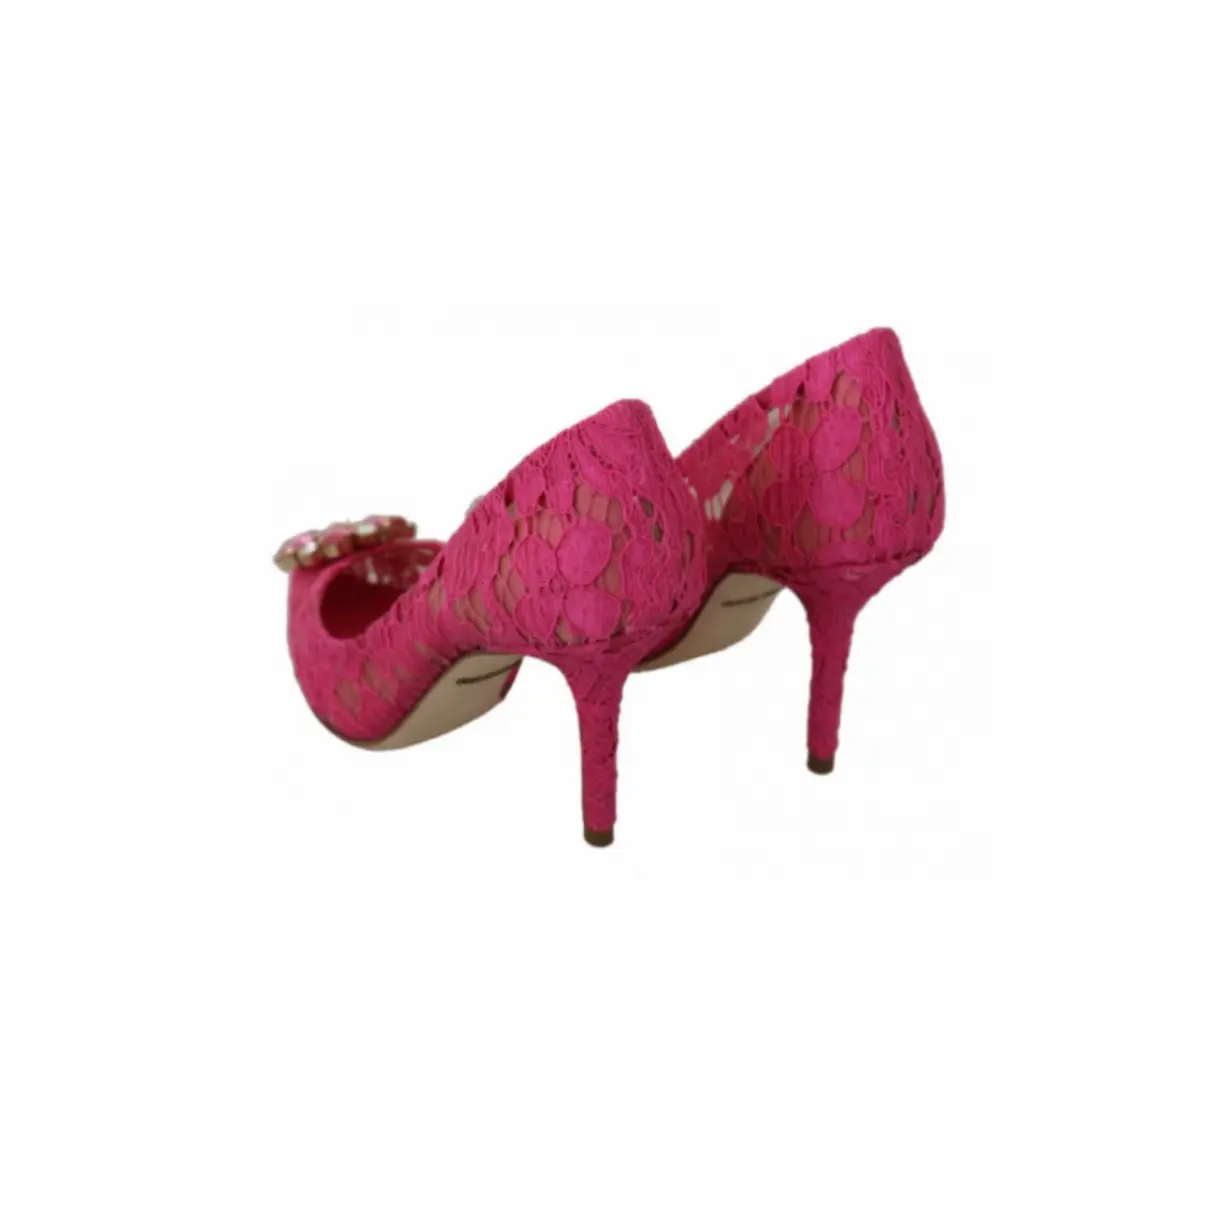 Taormina cloth heels Dolce & Gabbana